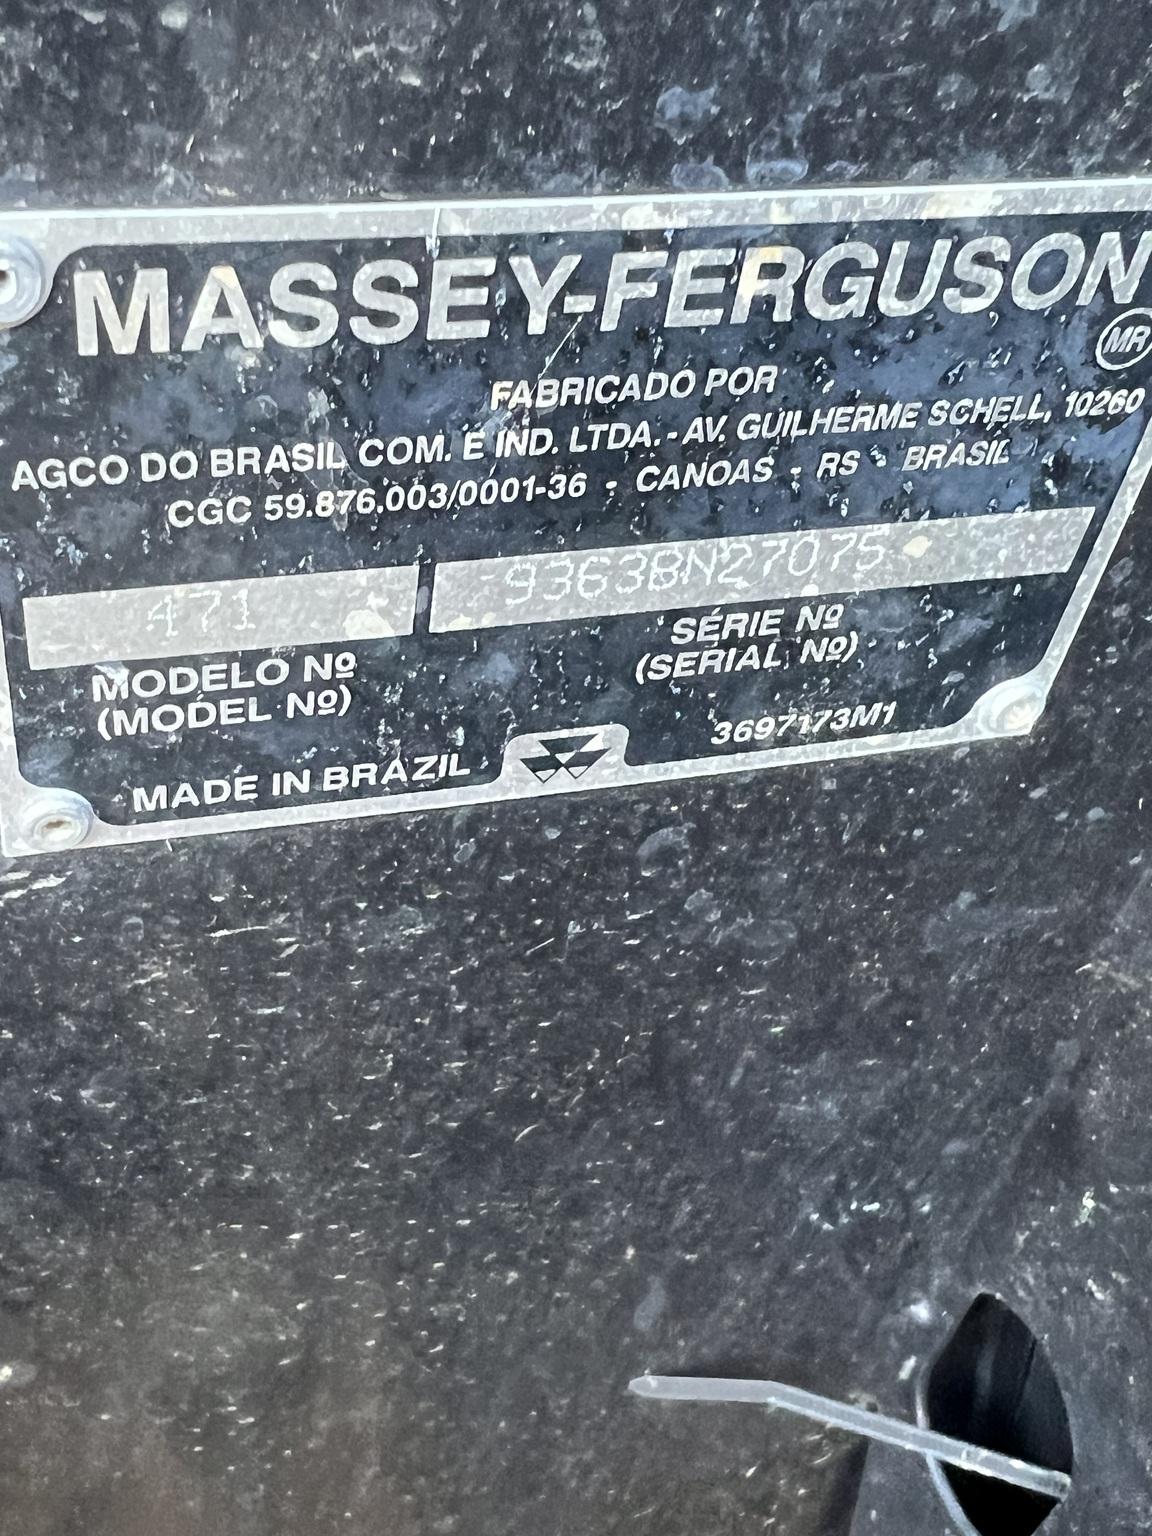 2004 Massey Ferguson 471